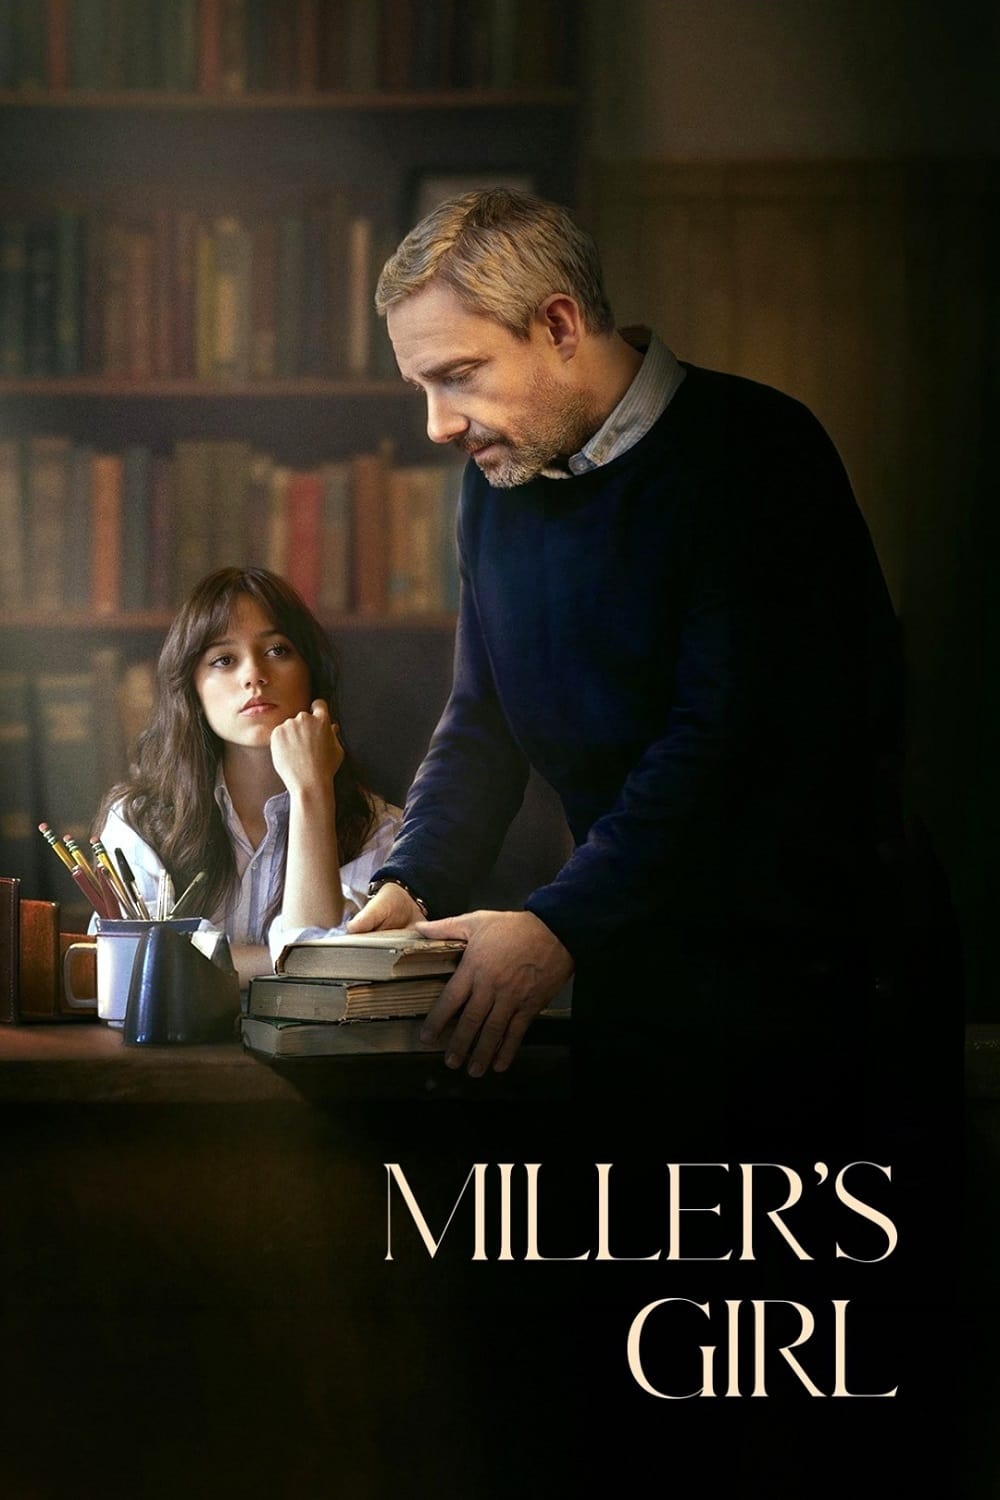 Poster for the movie "Miller's Girl"